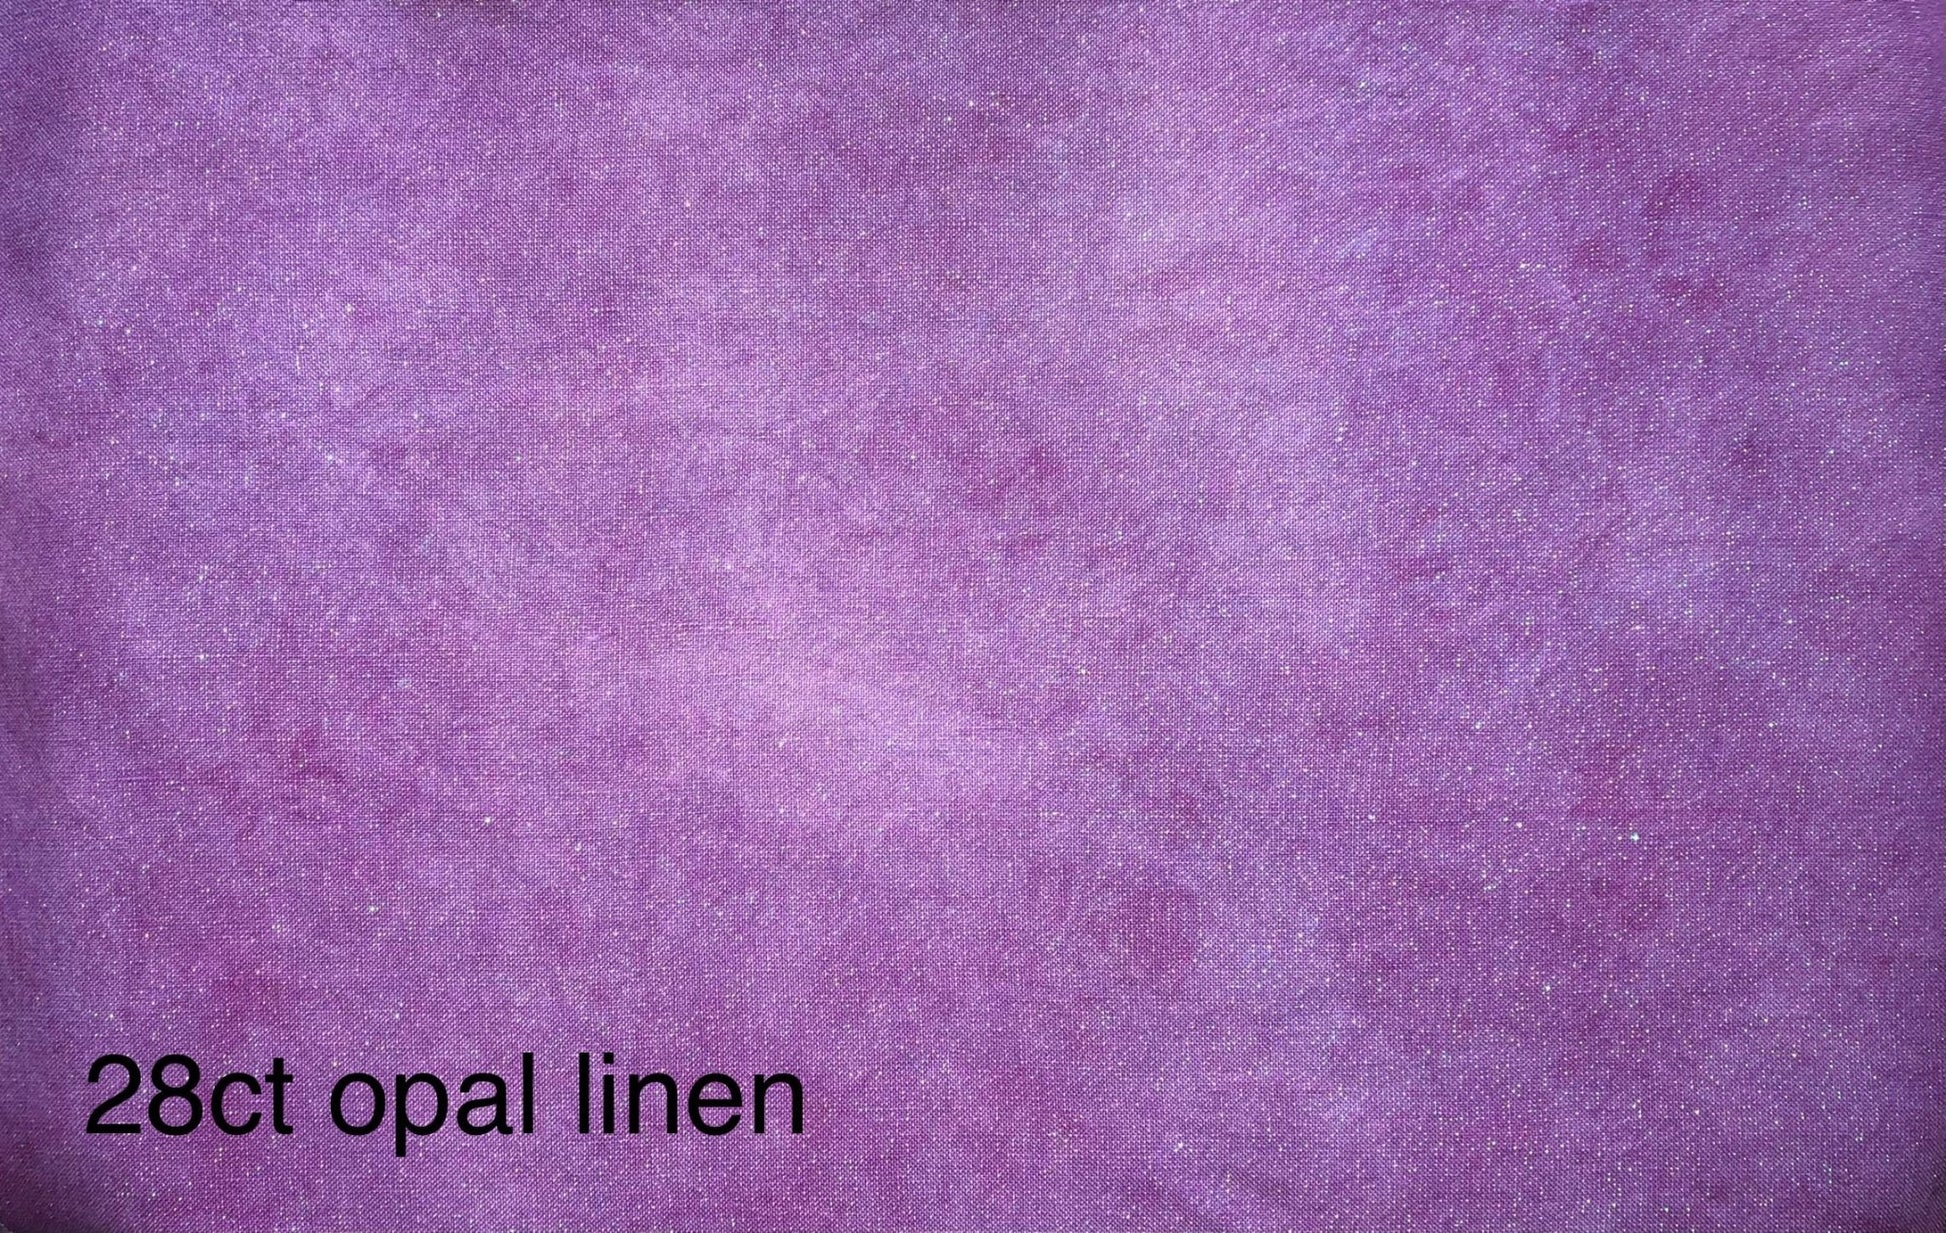 Linen - Ballade - Dyeing for Cross Stitch